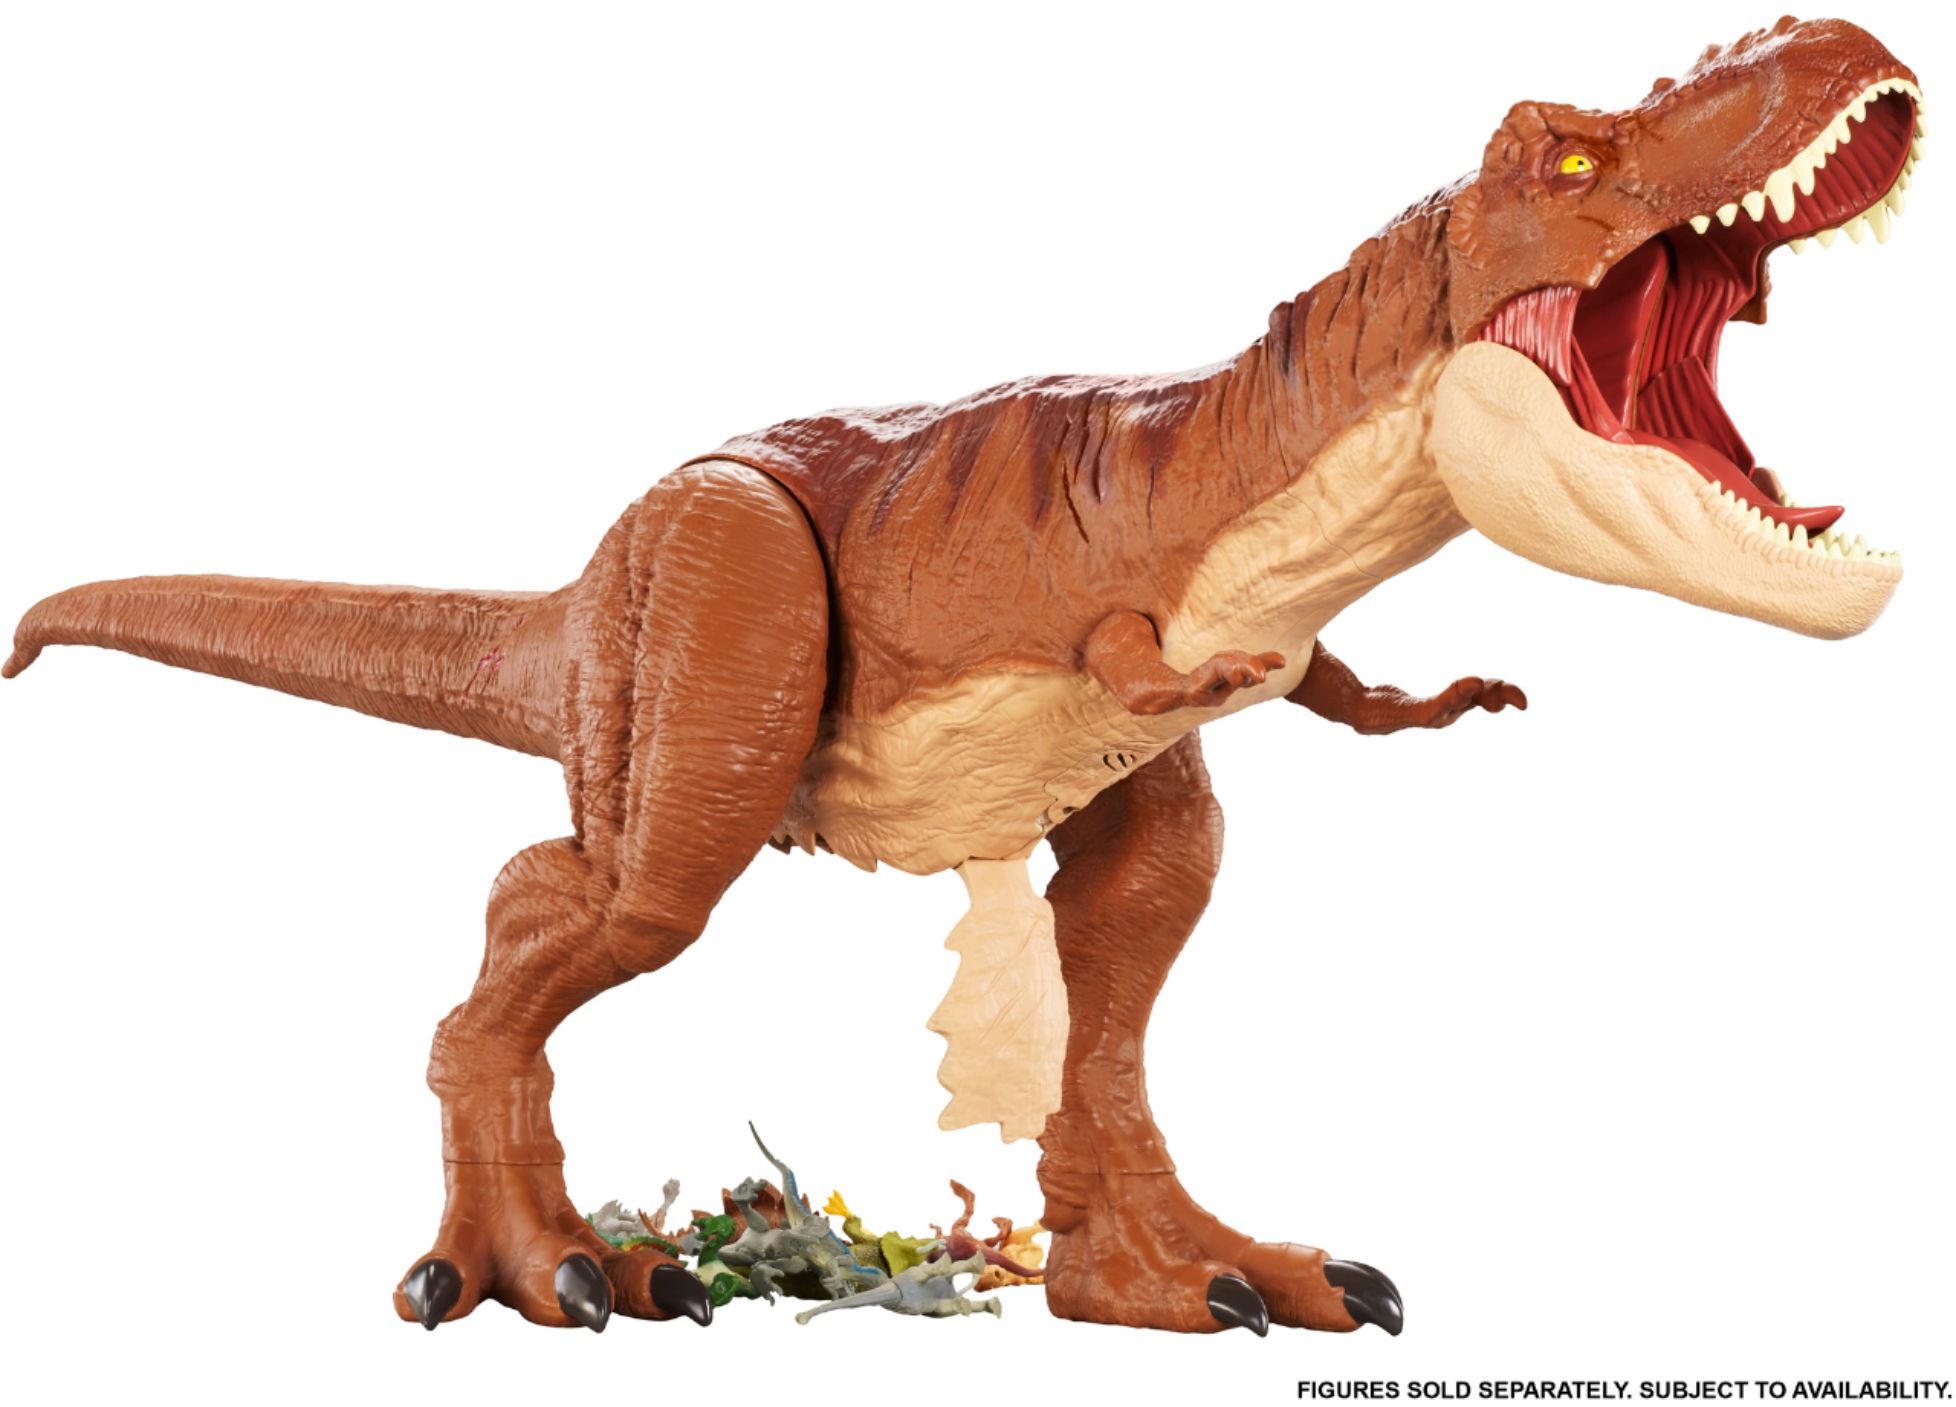 Jurassic World - Tiranossauro Rex, JURASSIC WORLD